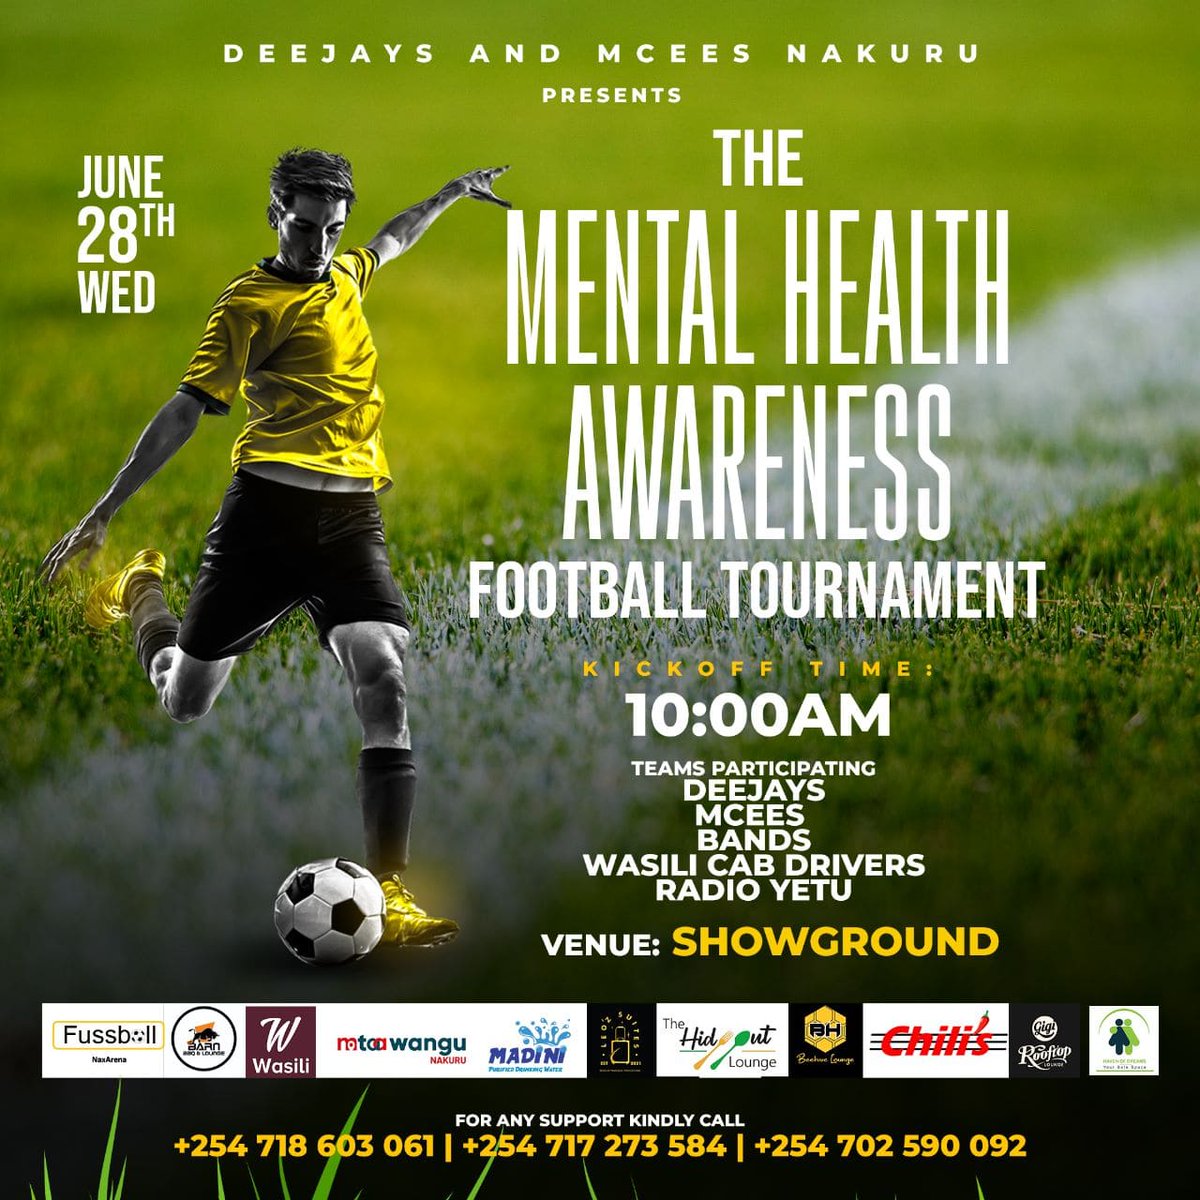 Join us tomorrow as we discuss Men's Mental Health Month
#sportsfordevelopment
#mentalhealth